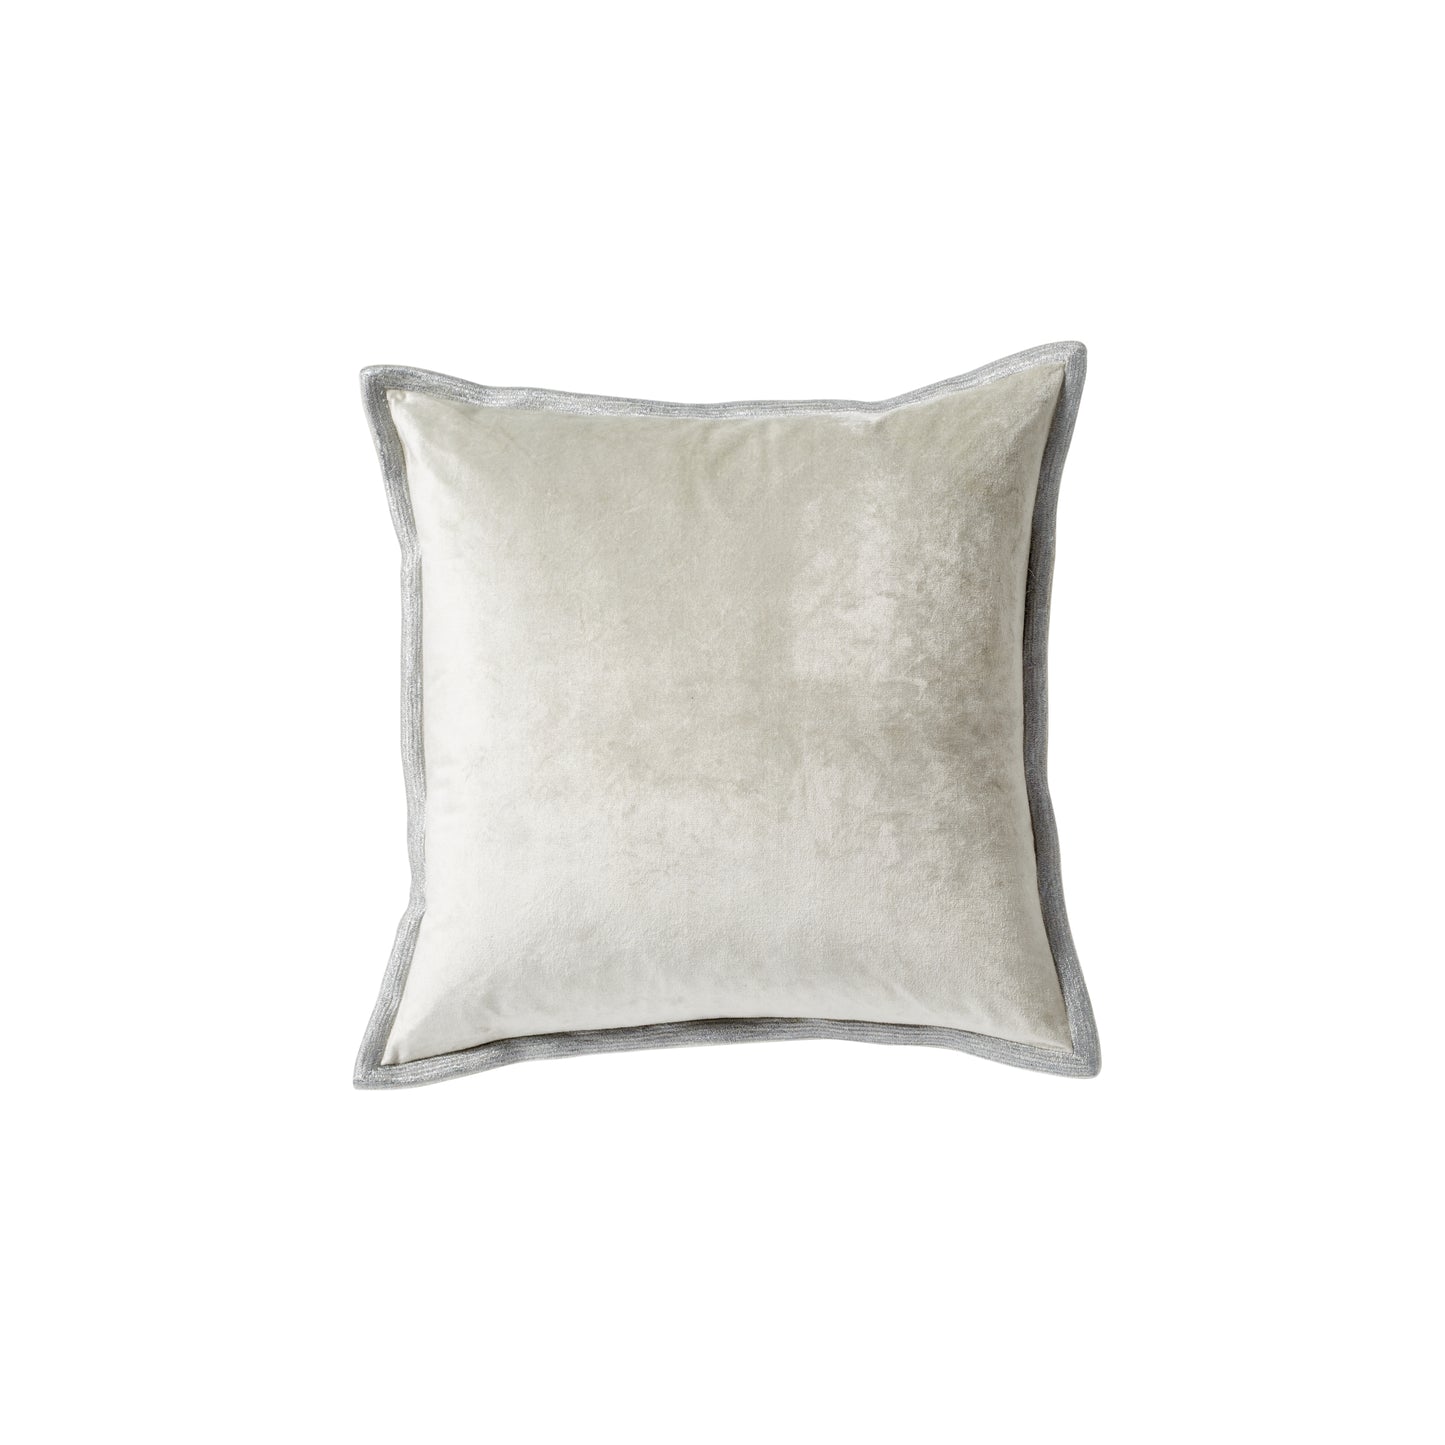 Michael Aram Velvet Metallic Stitch Decorative Pillow